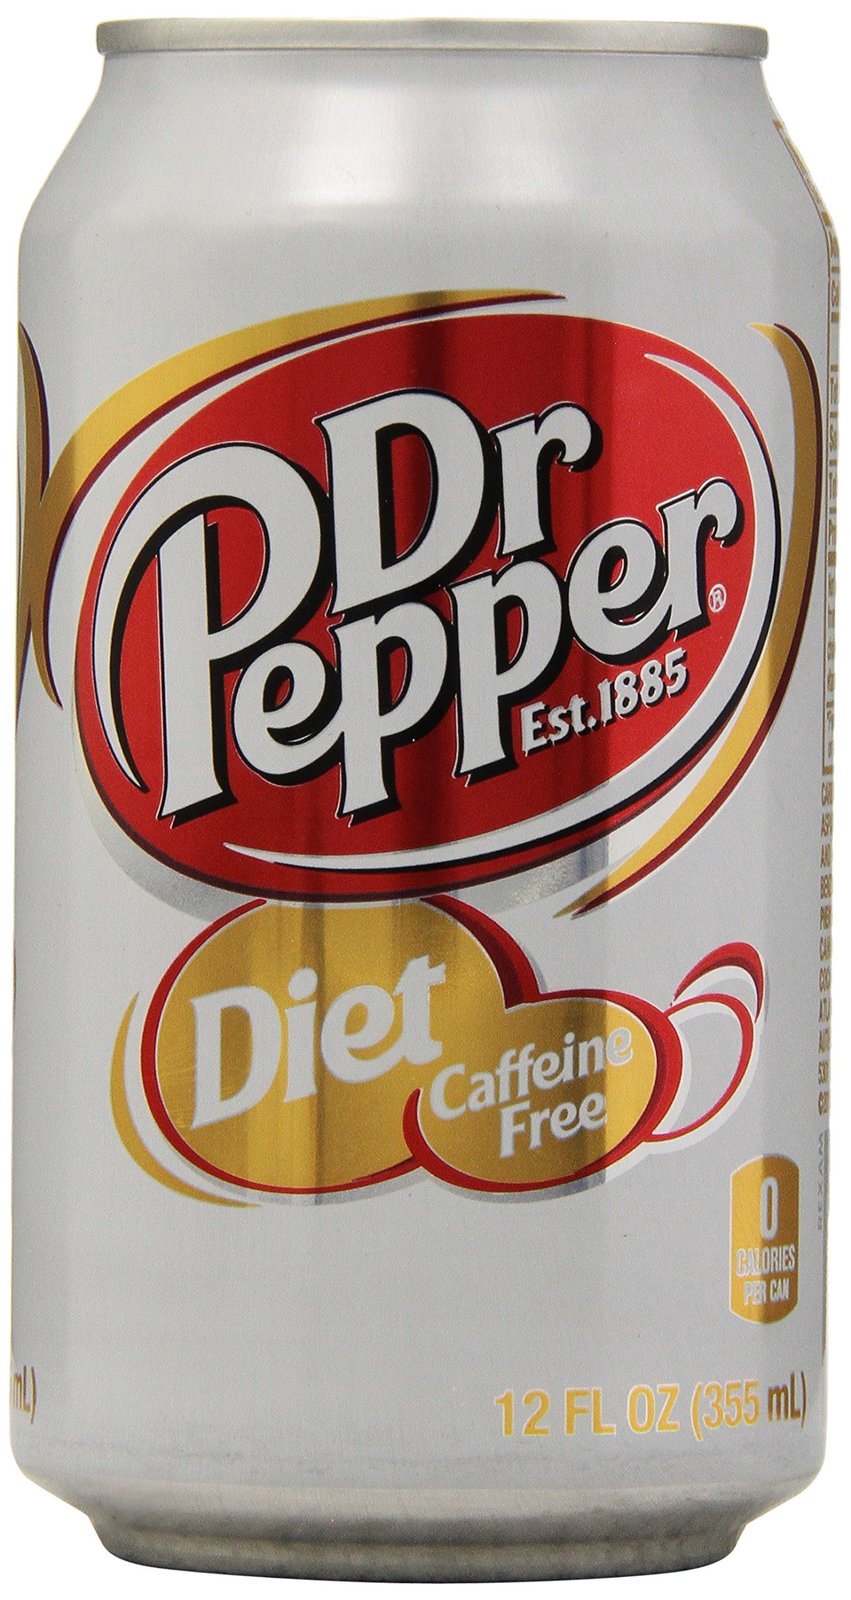 Plan diet dr pepper nutrition facts 12 oz can plan kenya diet plan free